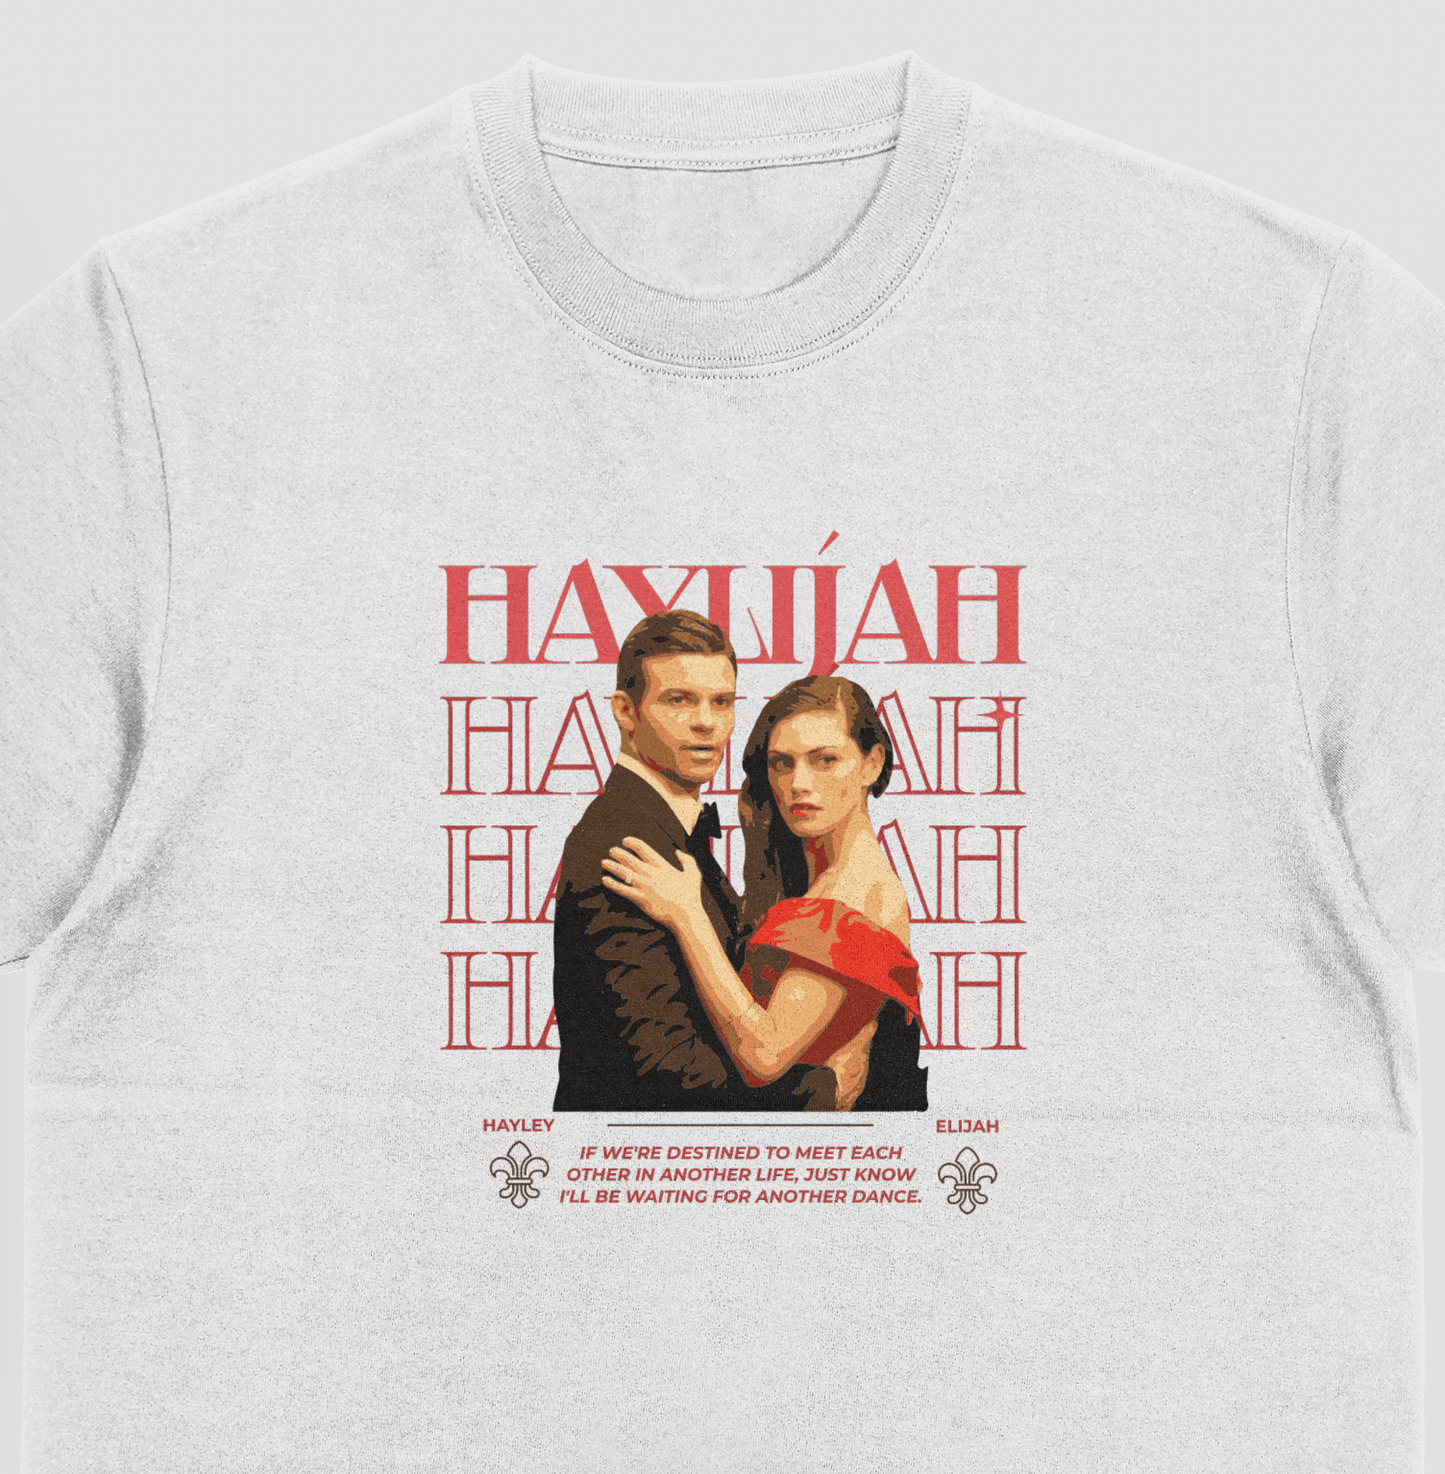 Haylijah T-shirt